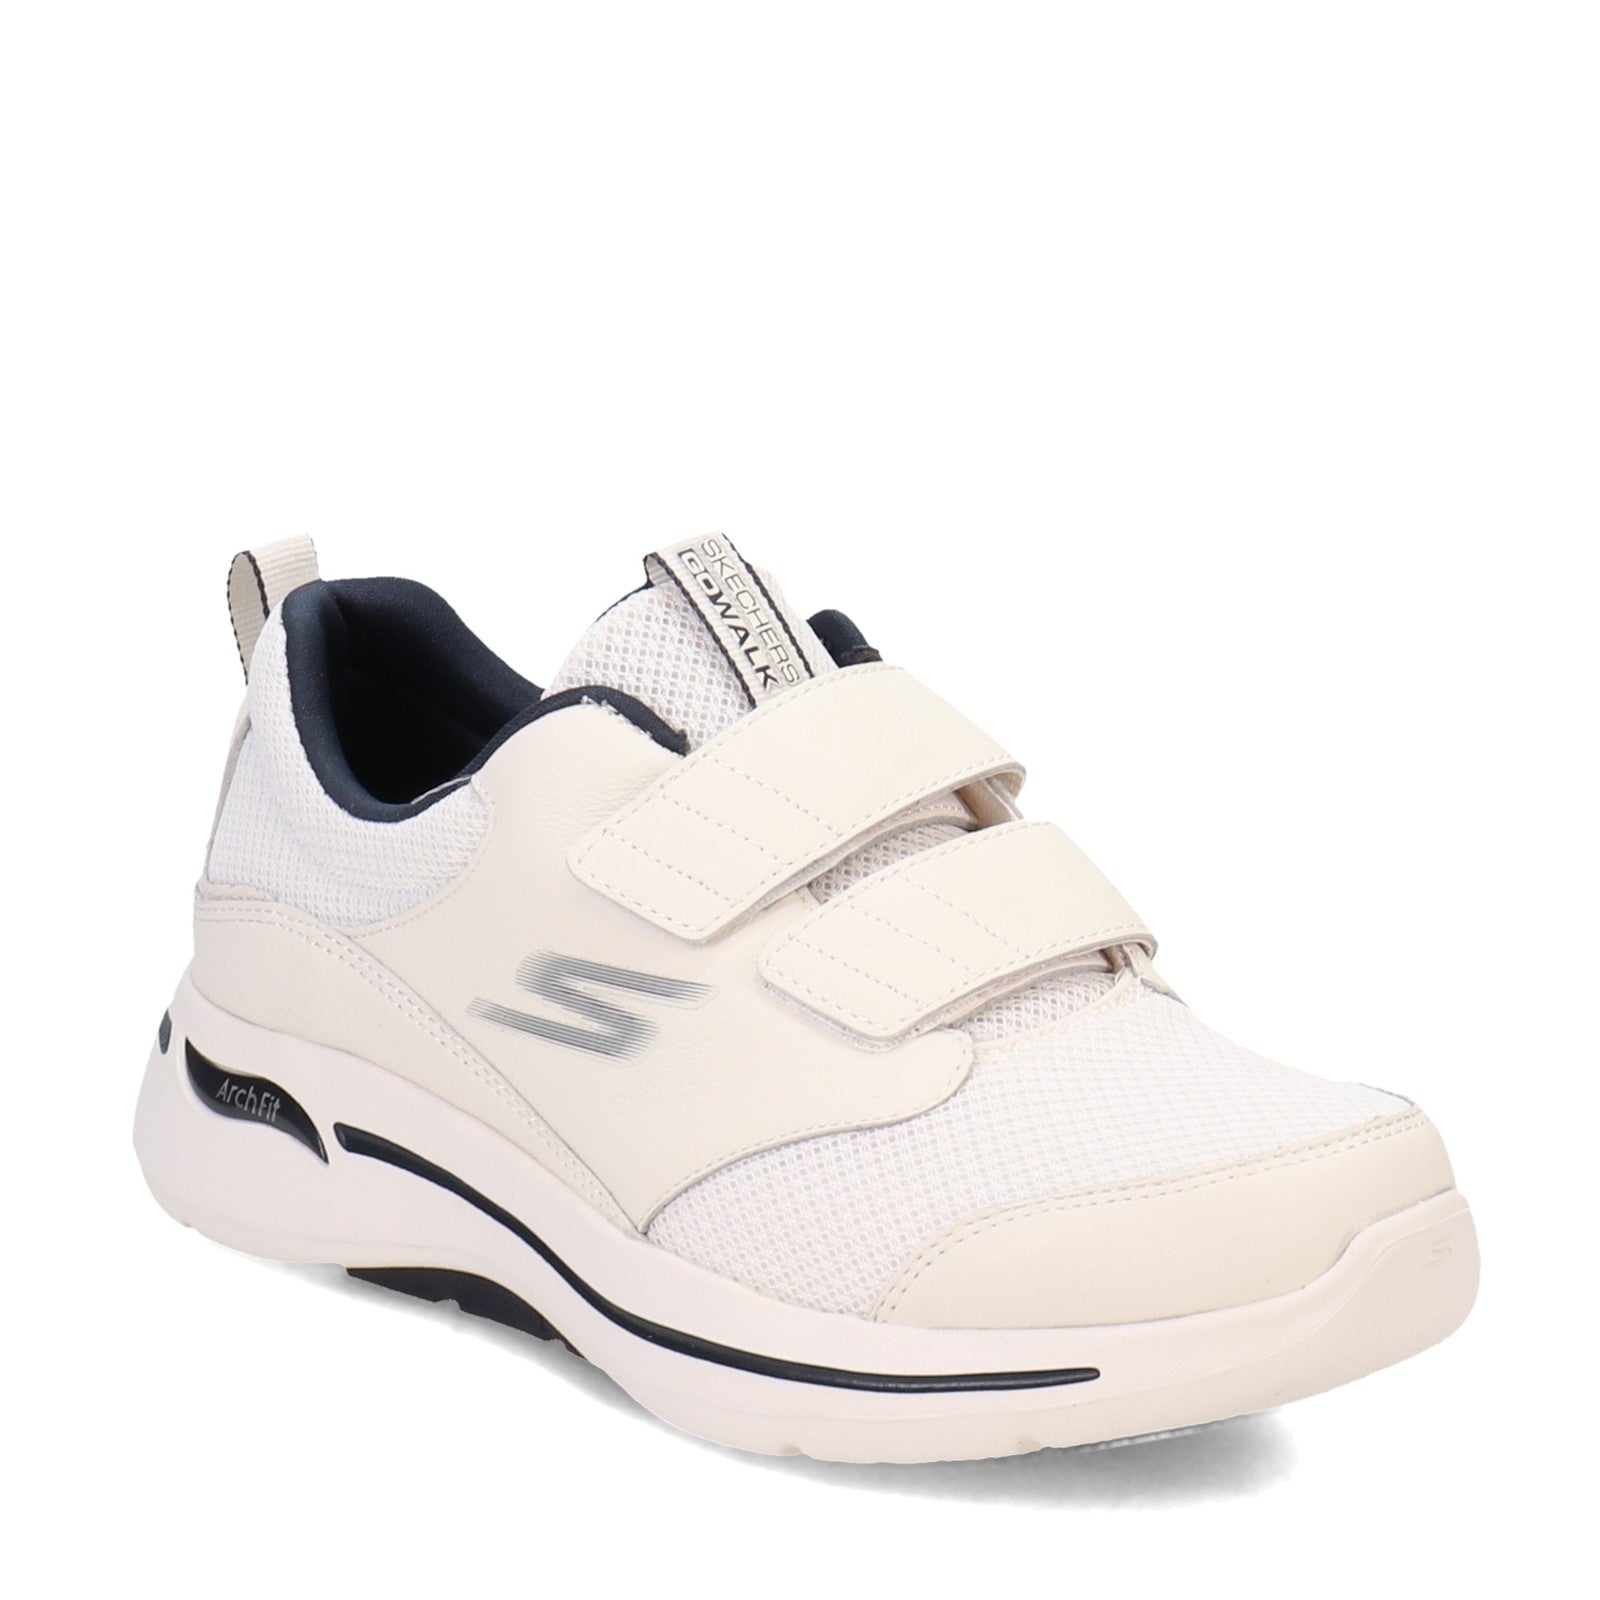 Buy Adtec Men's Uniform Athletic Velcro Shoes, White, 8 W US at Amazon.in